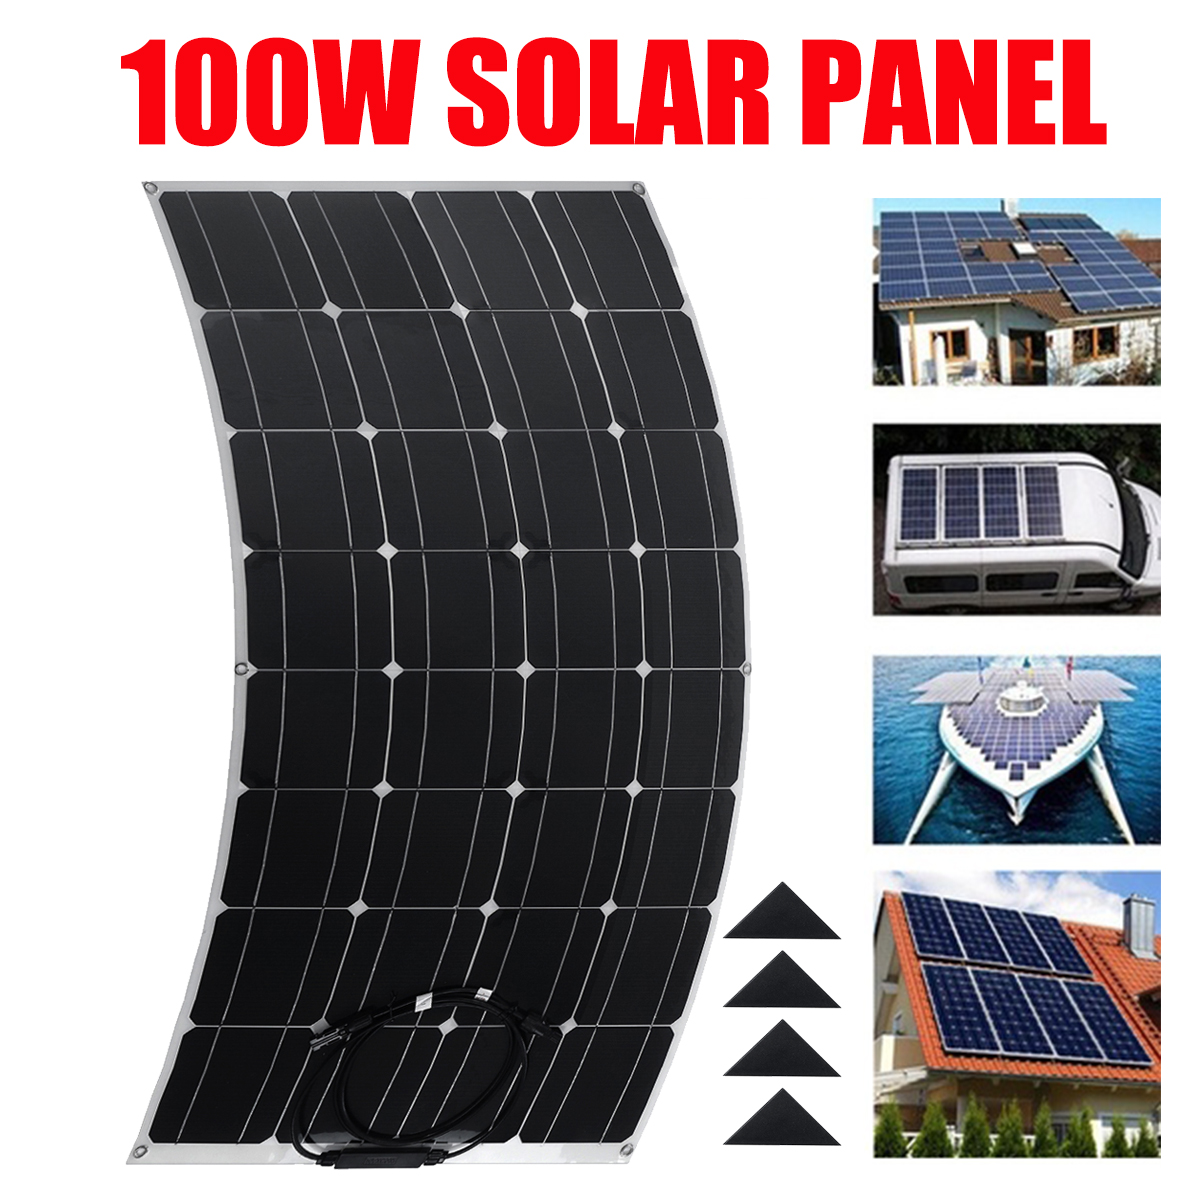 100W-Solar-Power-Panel-Kit-Mono-Home-Caravan-Camping-Power-Charging-Battery-1709870-1